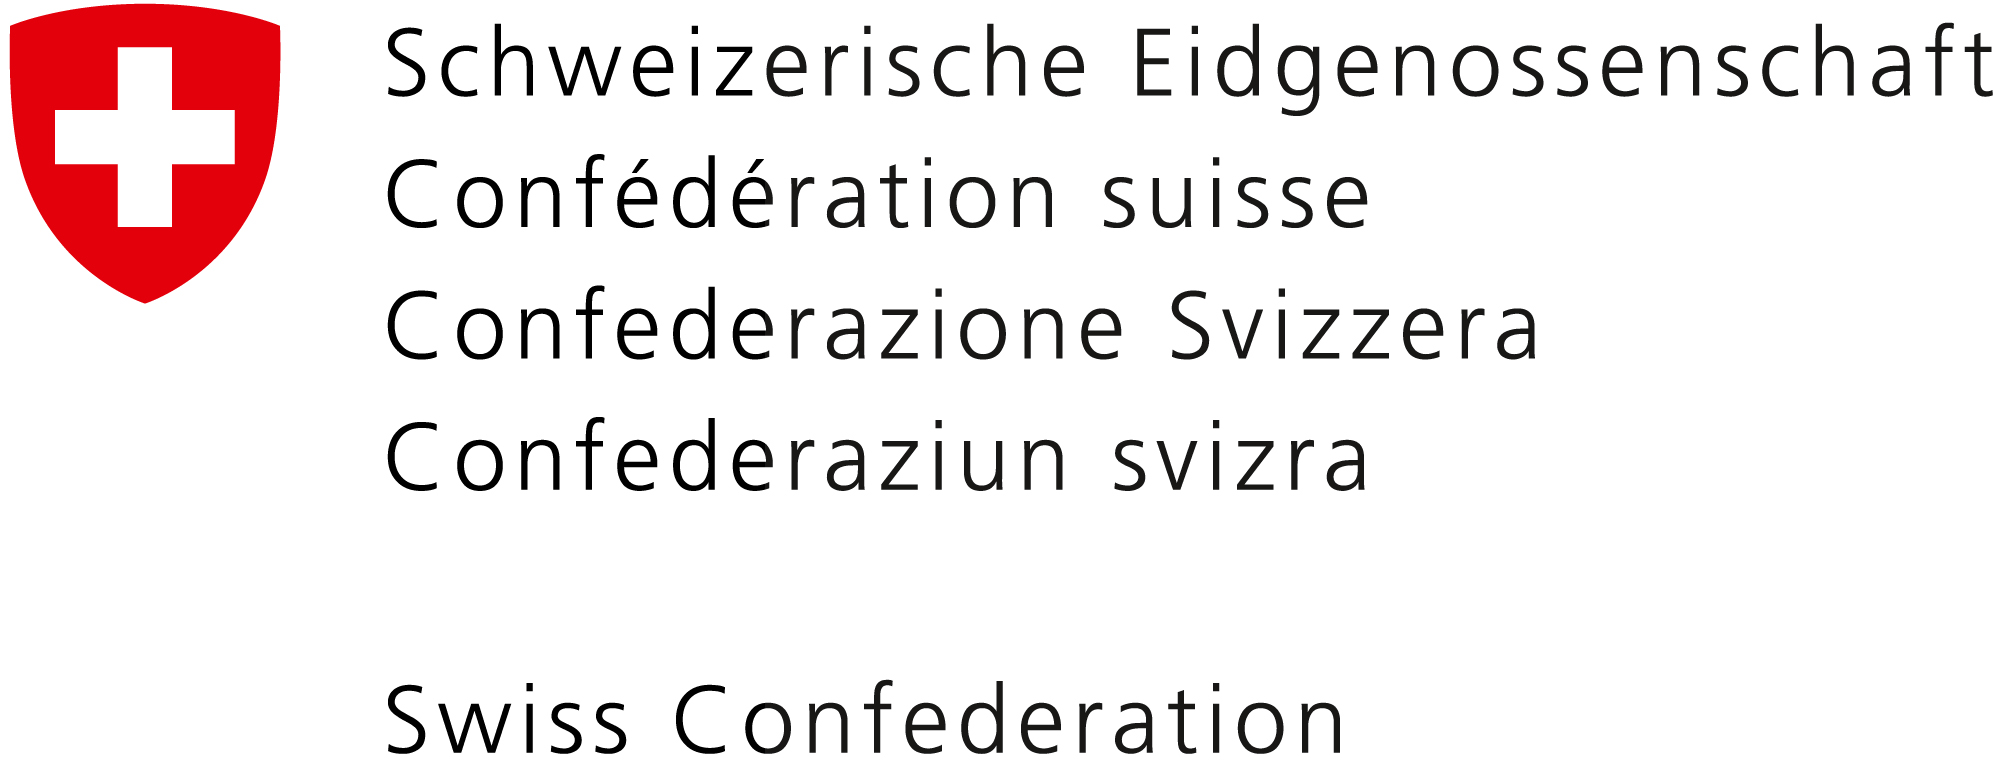 Swiss Conferdaration